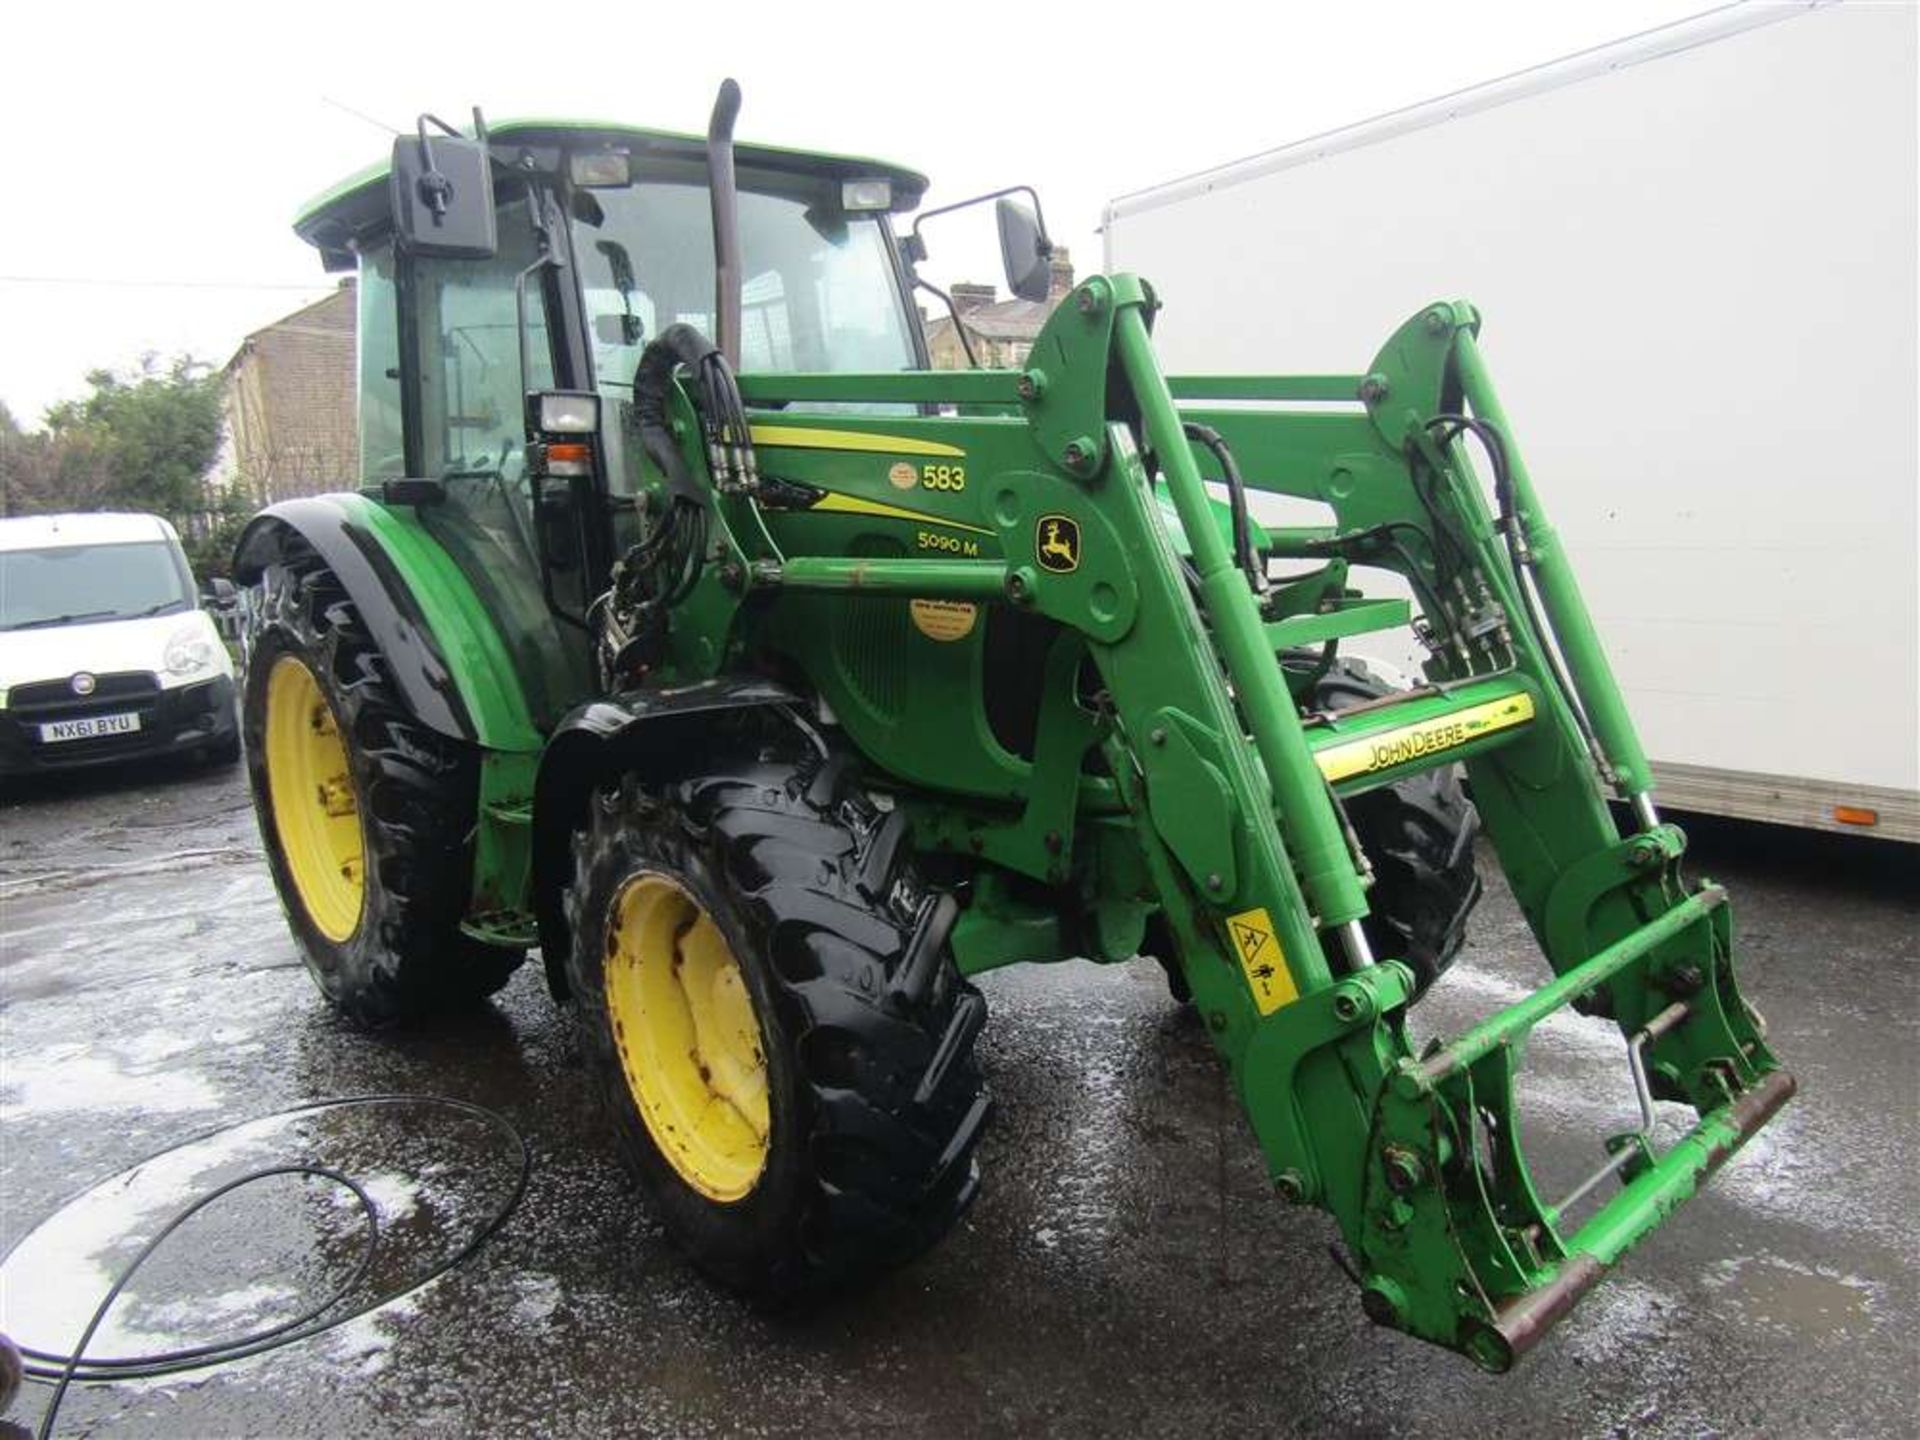 2011 11 reg John Deere 5090m Tractor c/w 583 Loader (Direct Council)